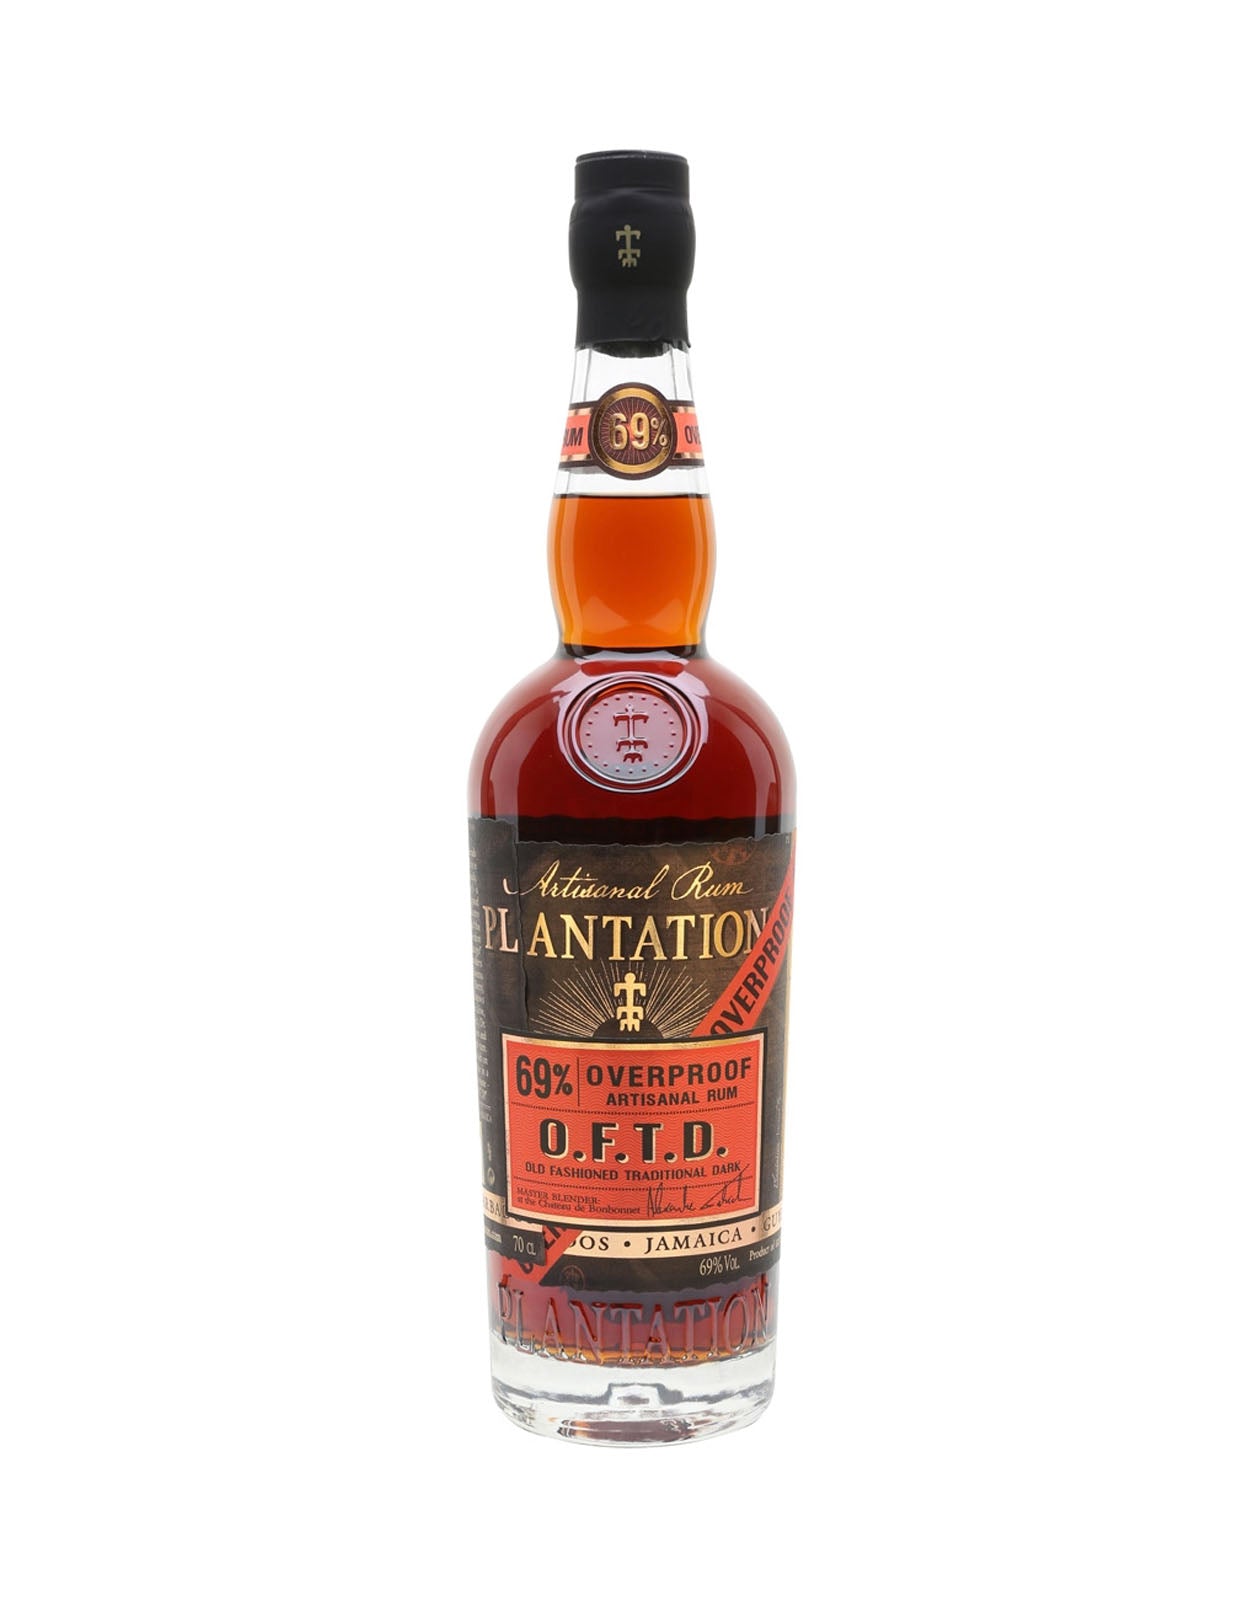 Plantation O.F.T.D (Old Fashioned Traditional Dark) Rum